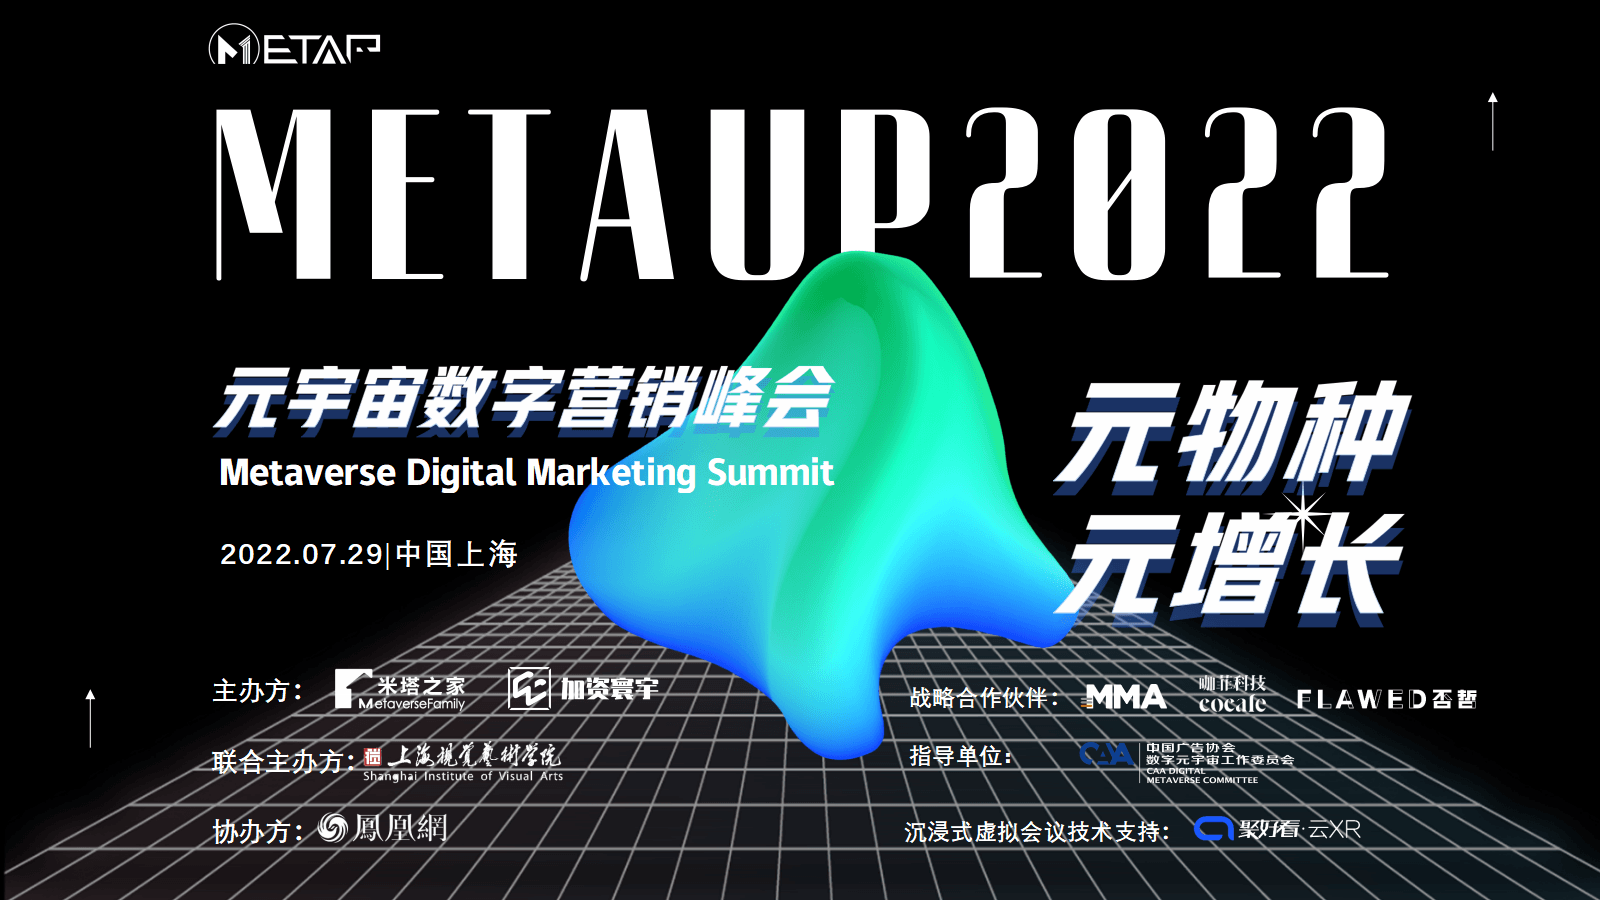 MetaUp2022元宇宙數字營銷峰會